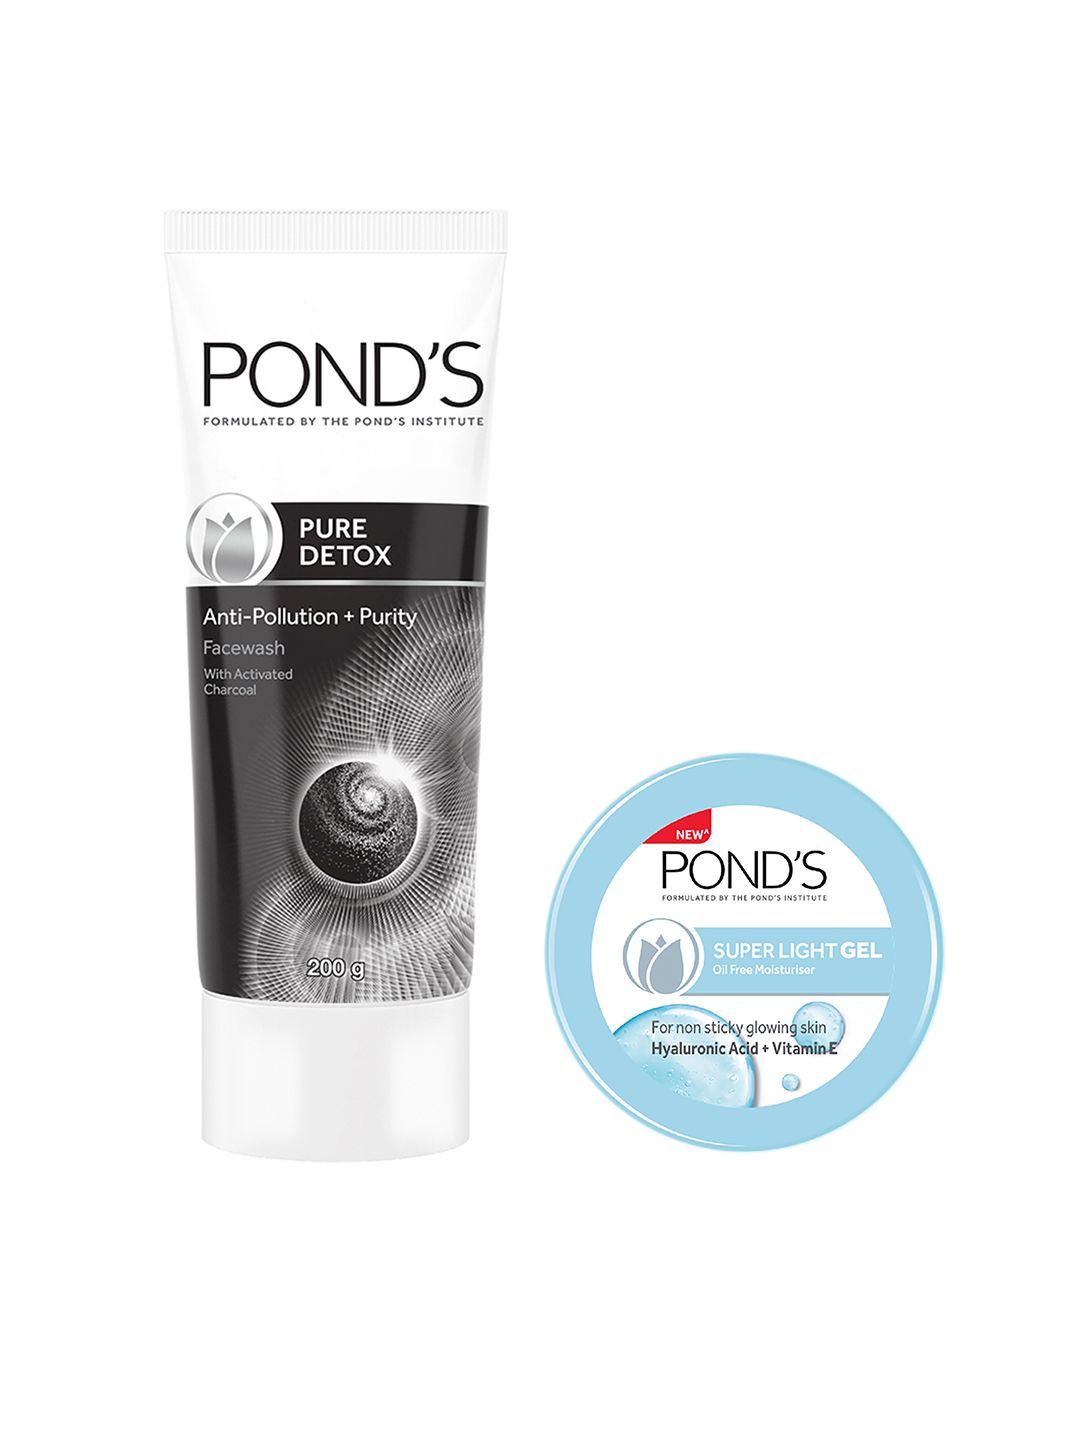 ponds-set-of-anti-pollution-charcoal-face-wash-&-super-light-gel-oil-free-moisturiser